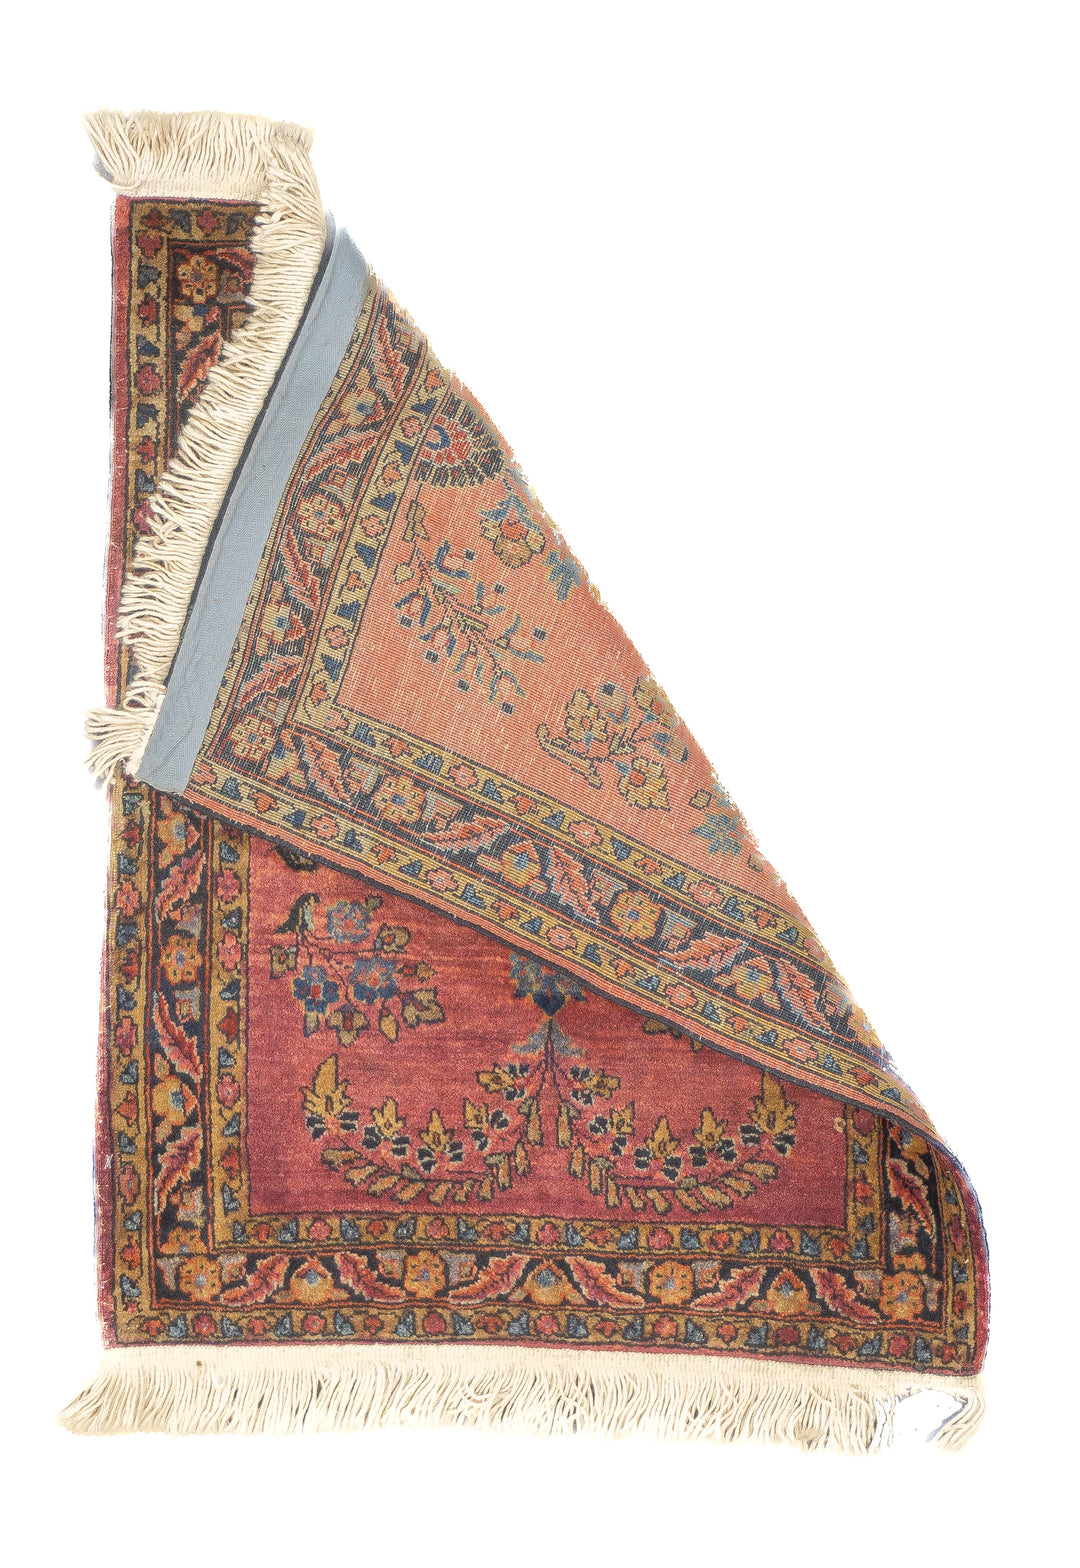 Antique Persian Sarouk Rug 1'11'' x 2'6''